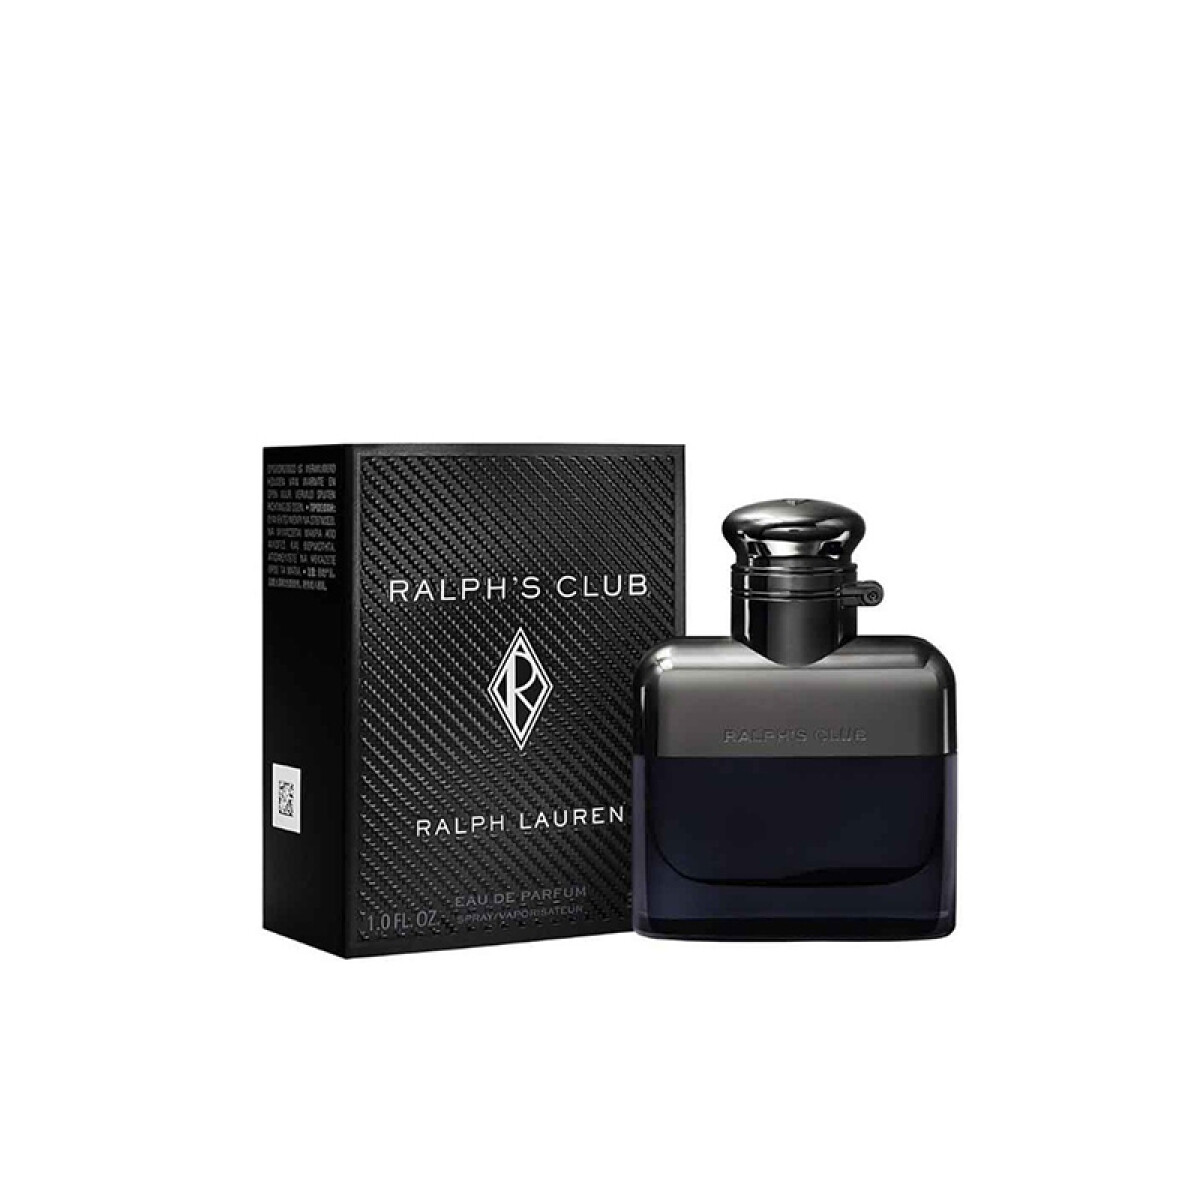 Ralph Lauren Ralph´s Club edp - 30 ml 